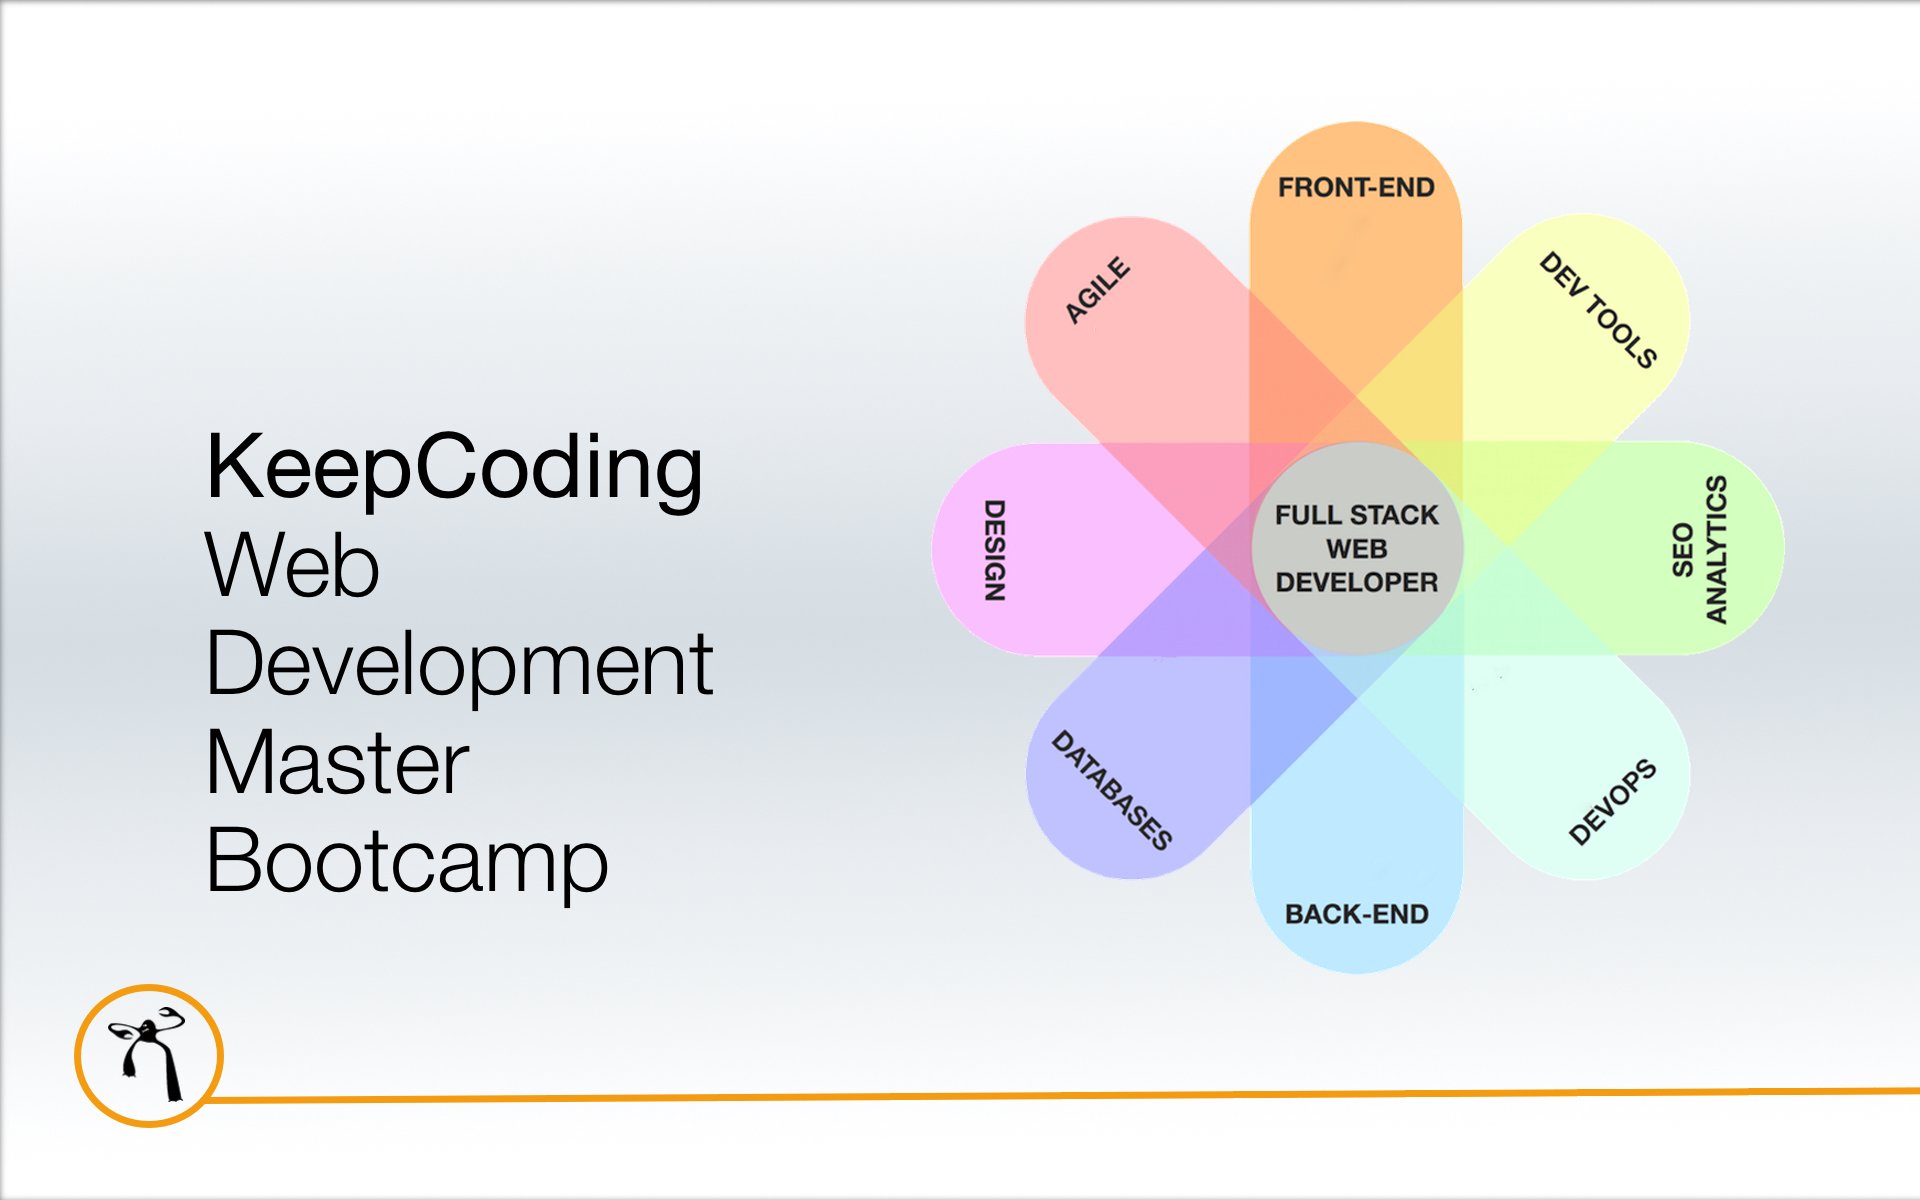 Web Development Master Bootcamp